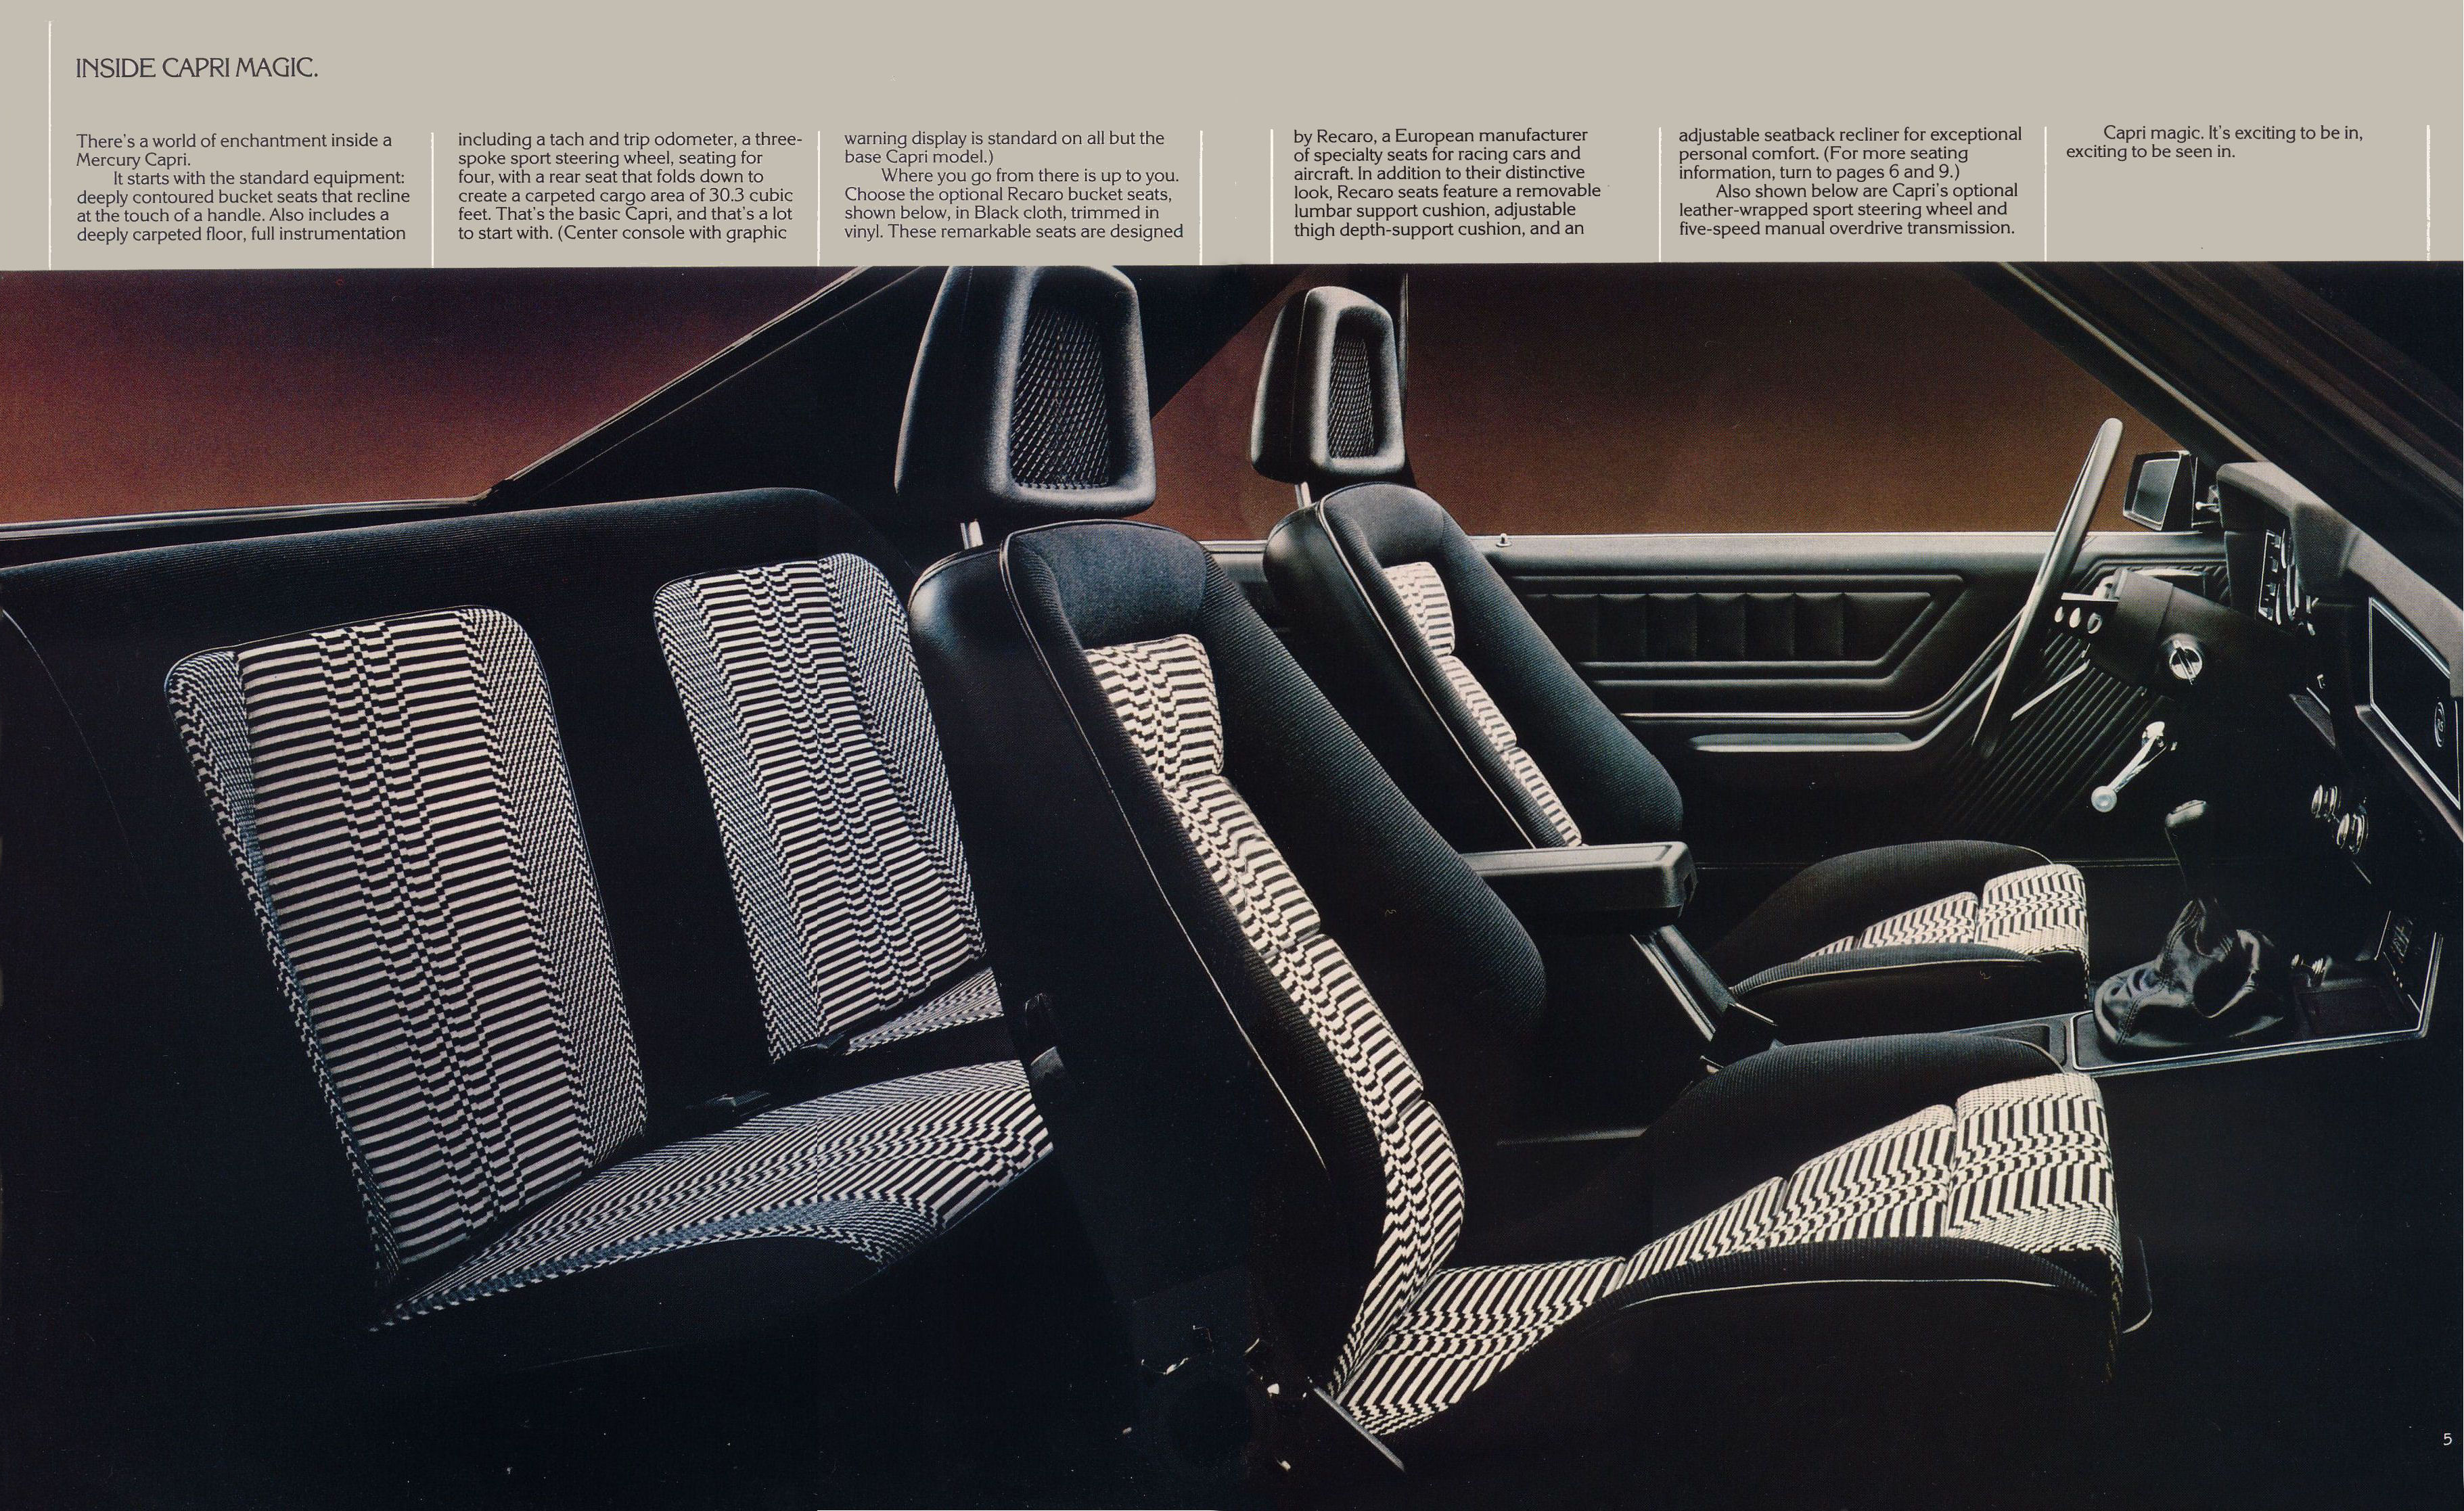 1982 Mercury Capri Brochure Page 7